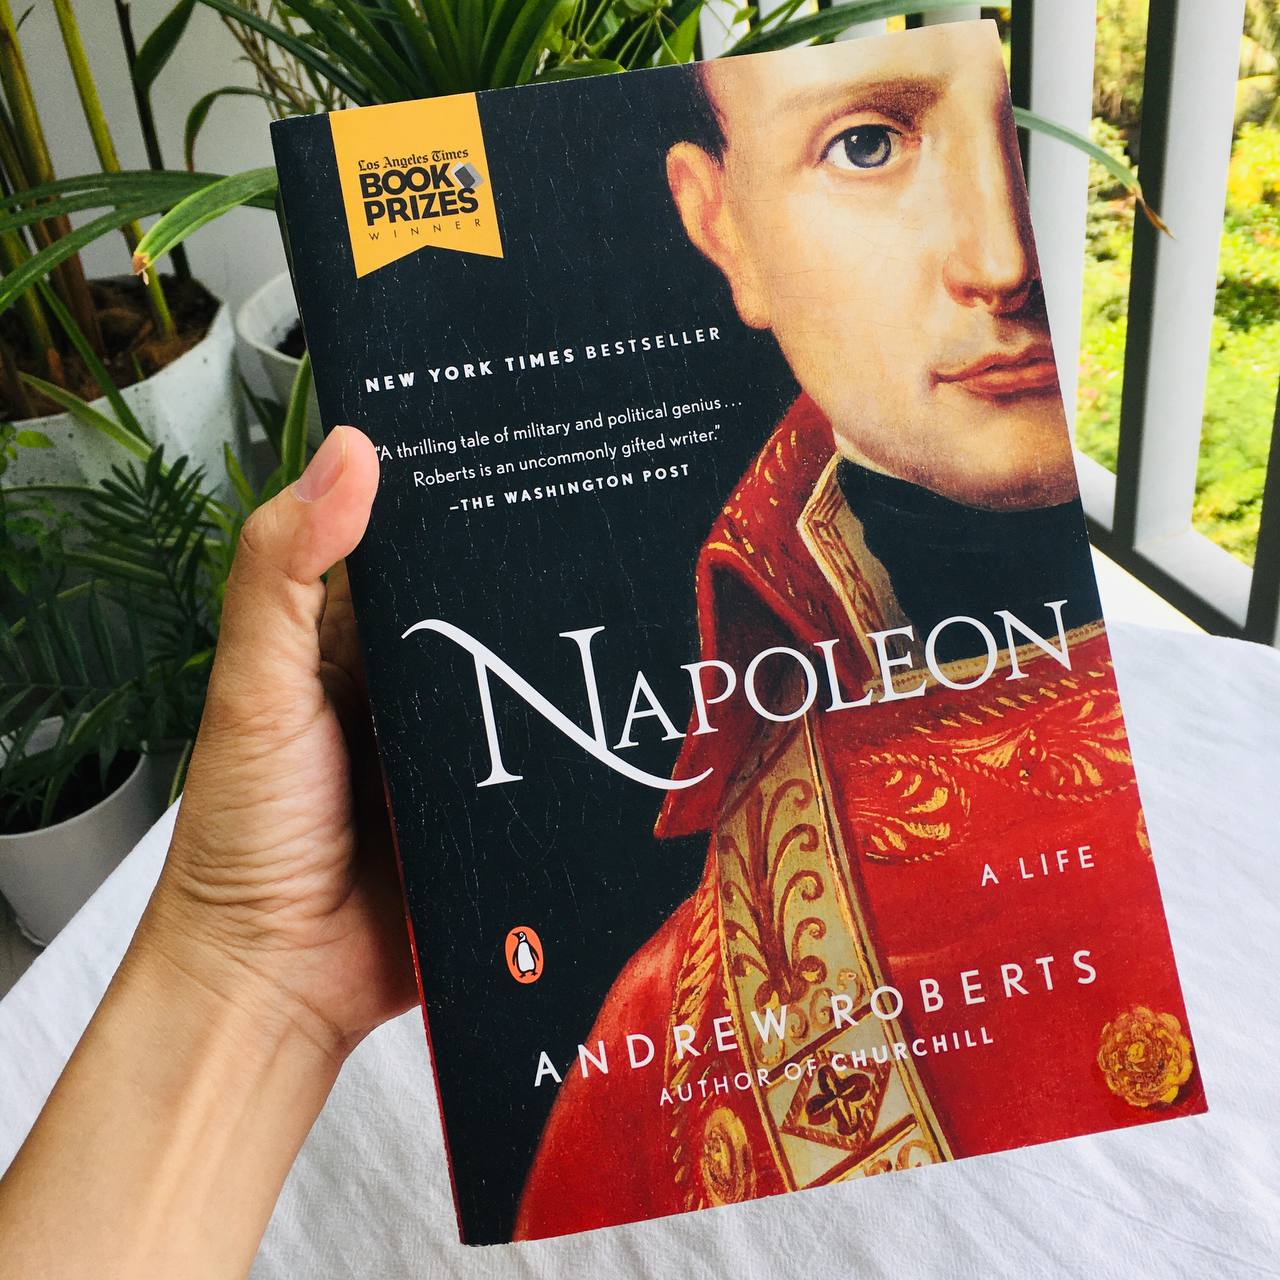 Napoleon: A Life